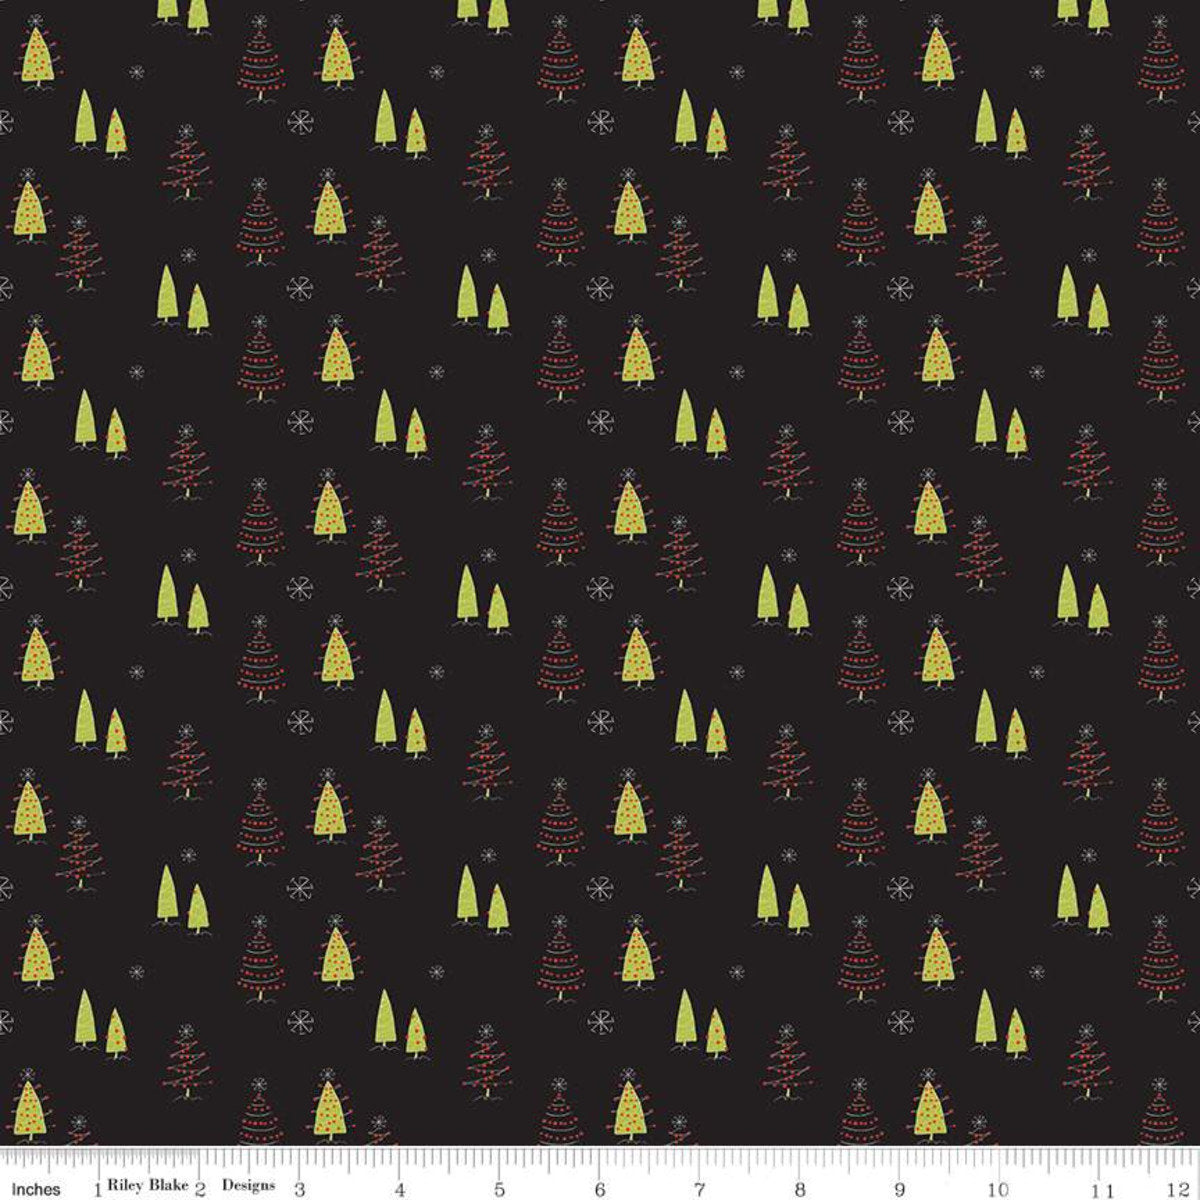 Merry Little Christmas - Trees black - Sandy Gervais - Riley Blake Designs half yard fabric - holiday